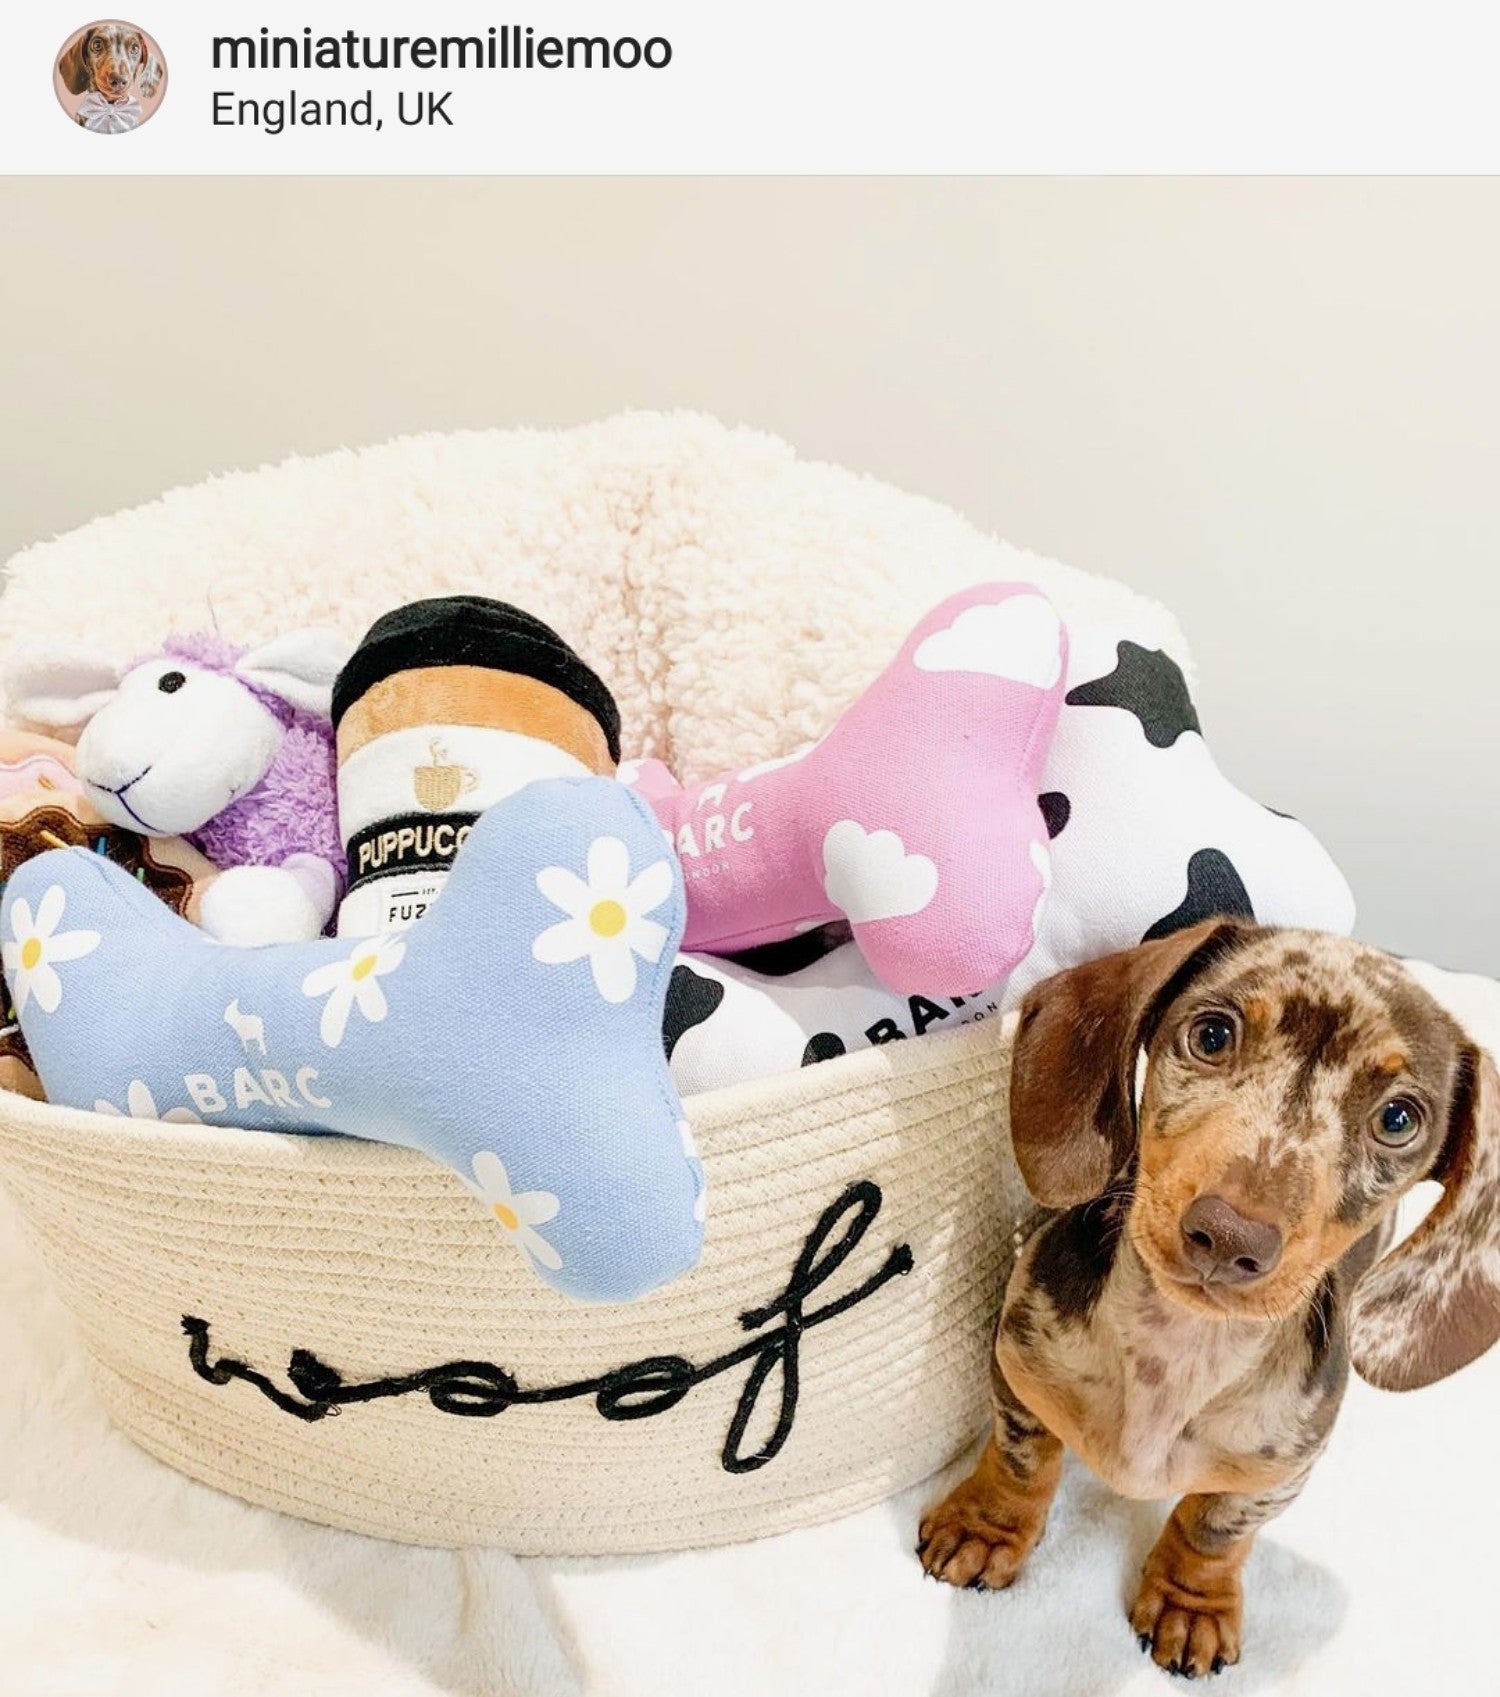 Dachshund Puppy Toys with Millie Moo the Miniature Dachshund (via Instagram)